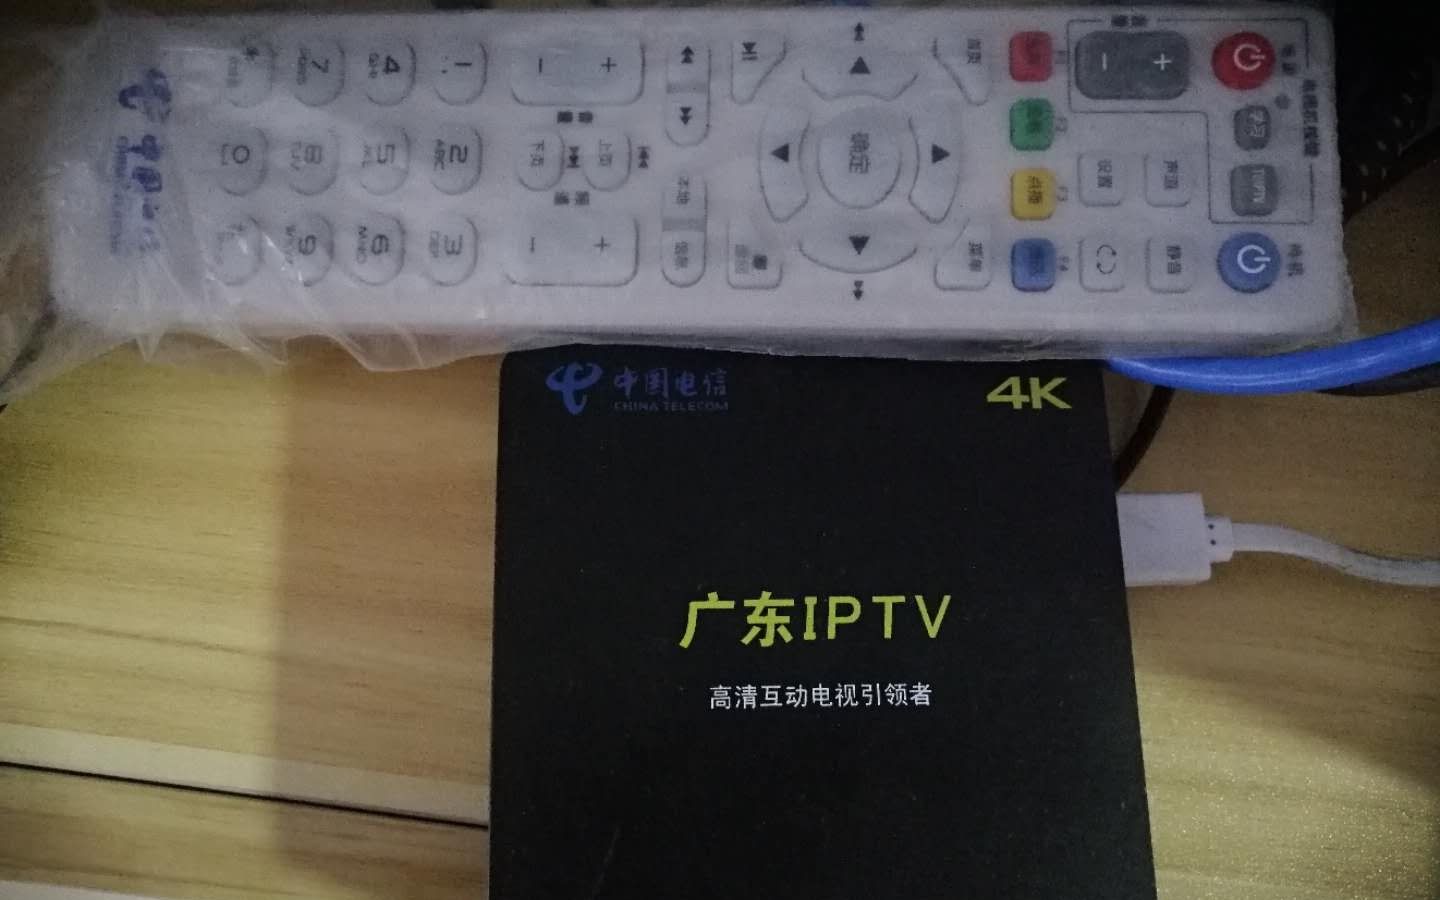 IPTV融网简化设置，不需要加交换机，不需要设vlan，不需要脚本。用电脑和手机看IPTV。可以扔机顶盒了。